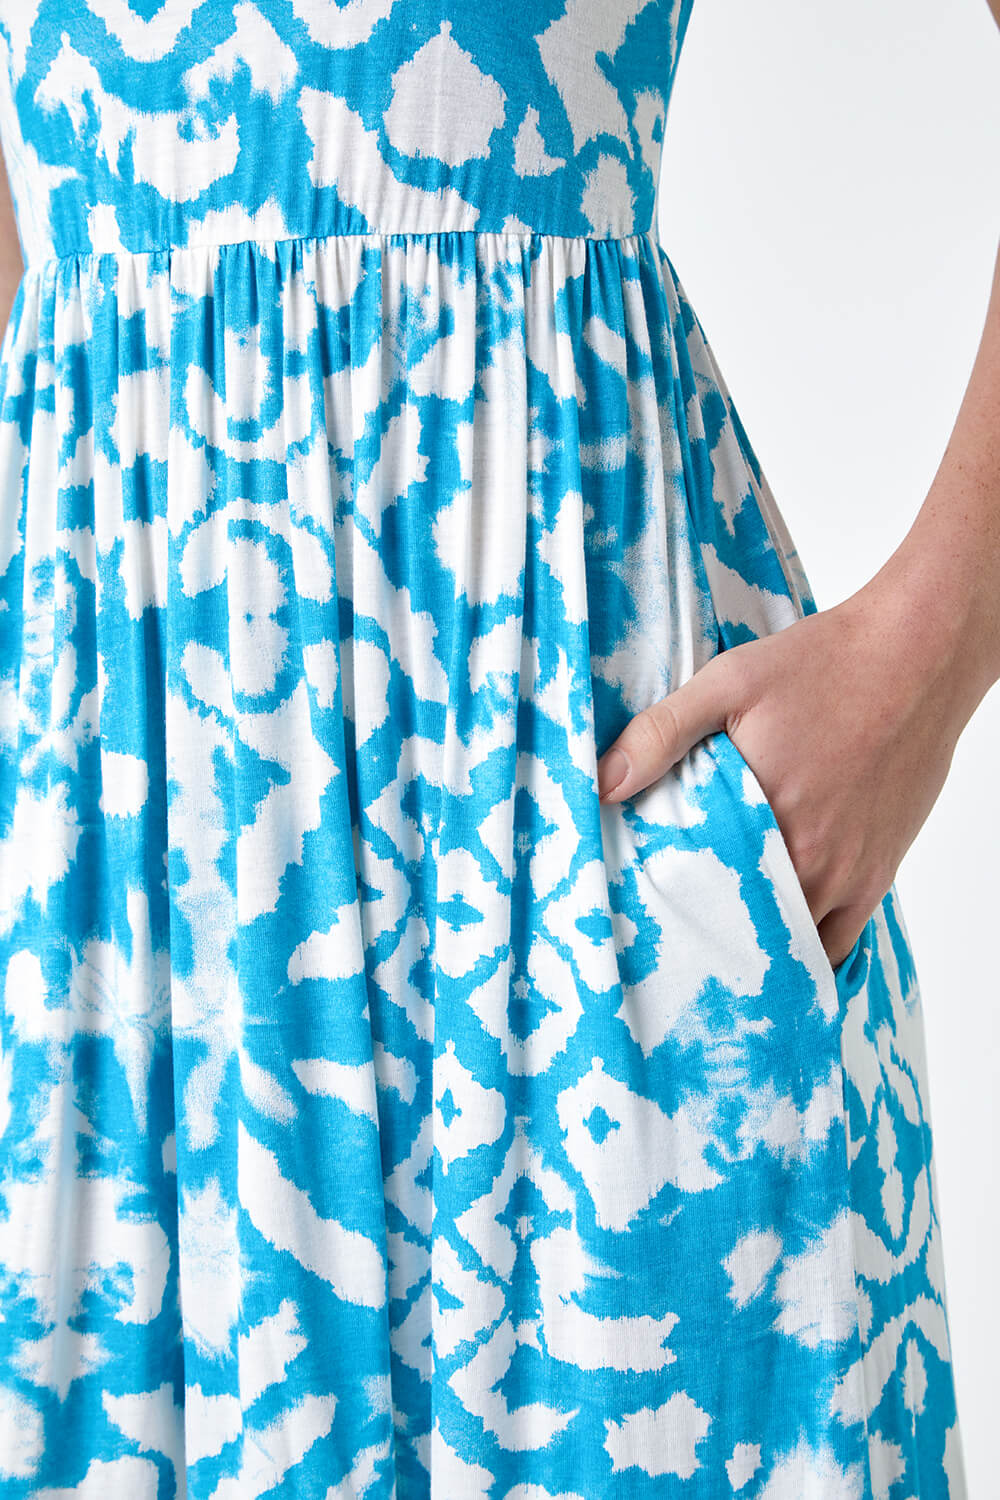 Turquoise Batik Print Stretch Jersey Pocket Dress, Image 5 of 5